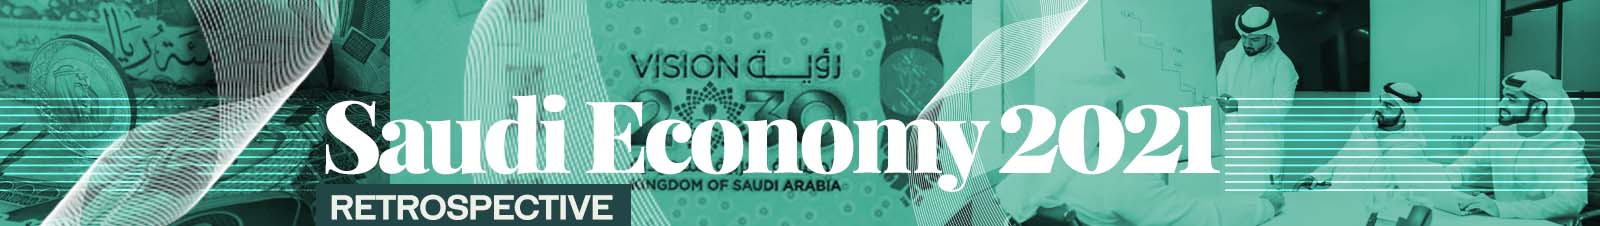 Saudi Economy 2021